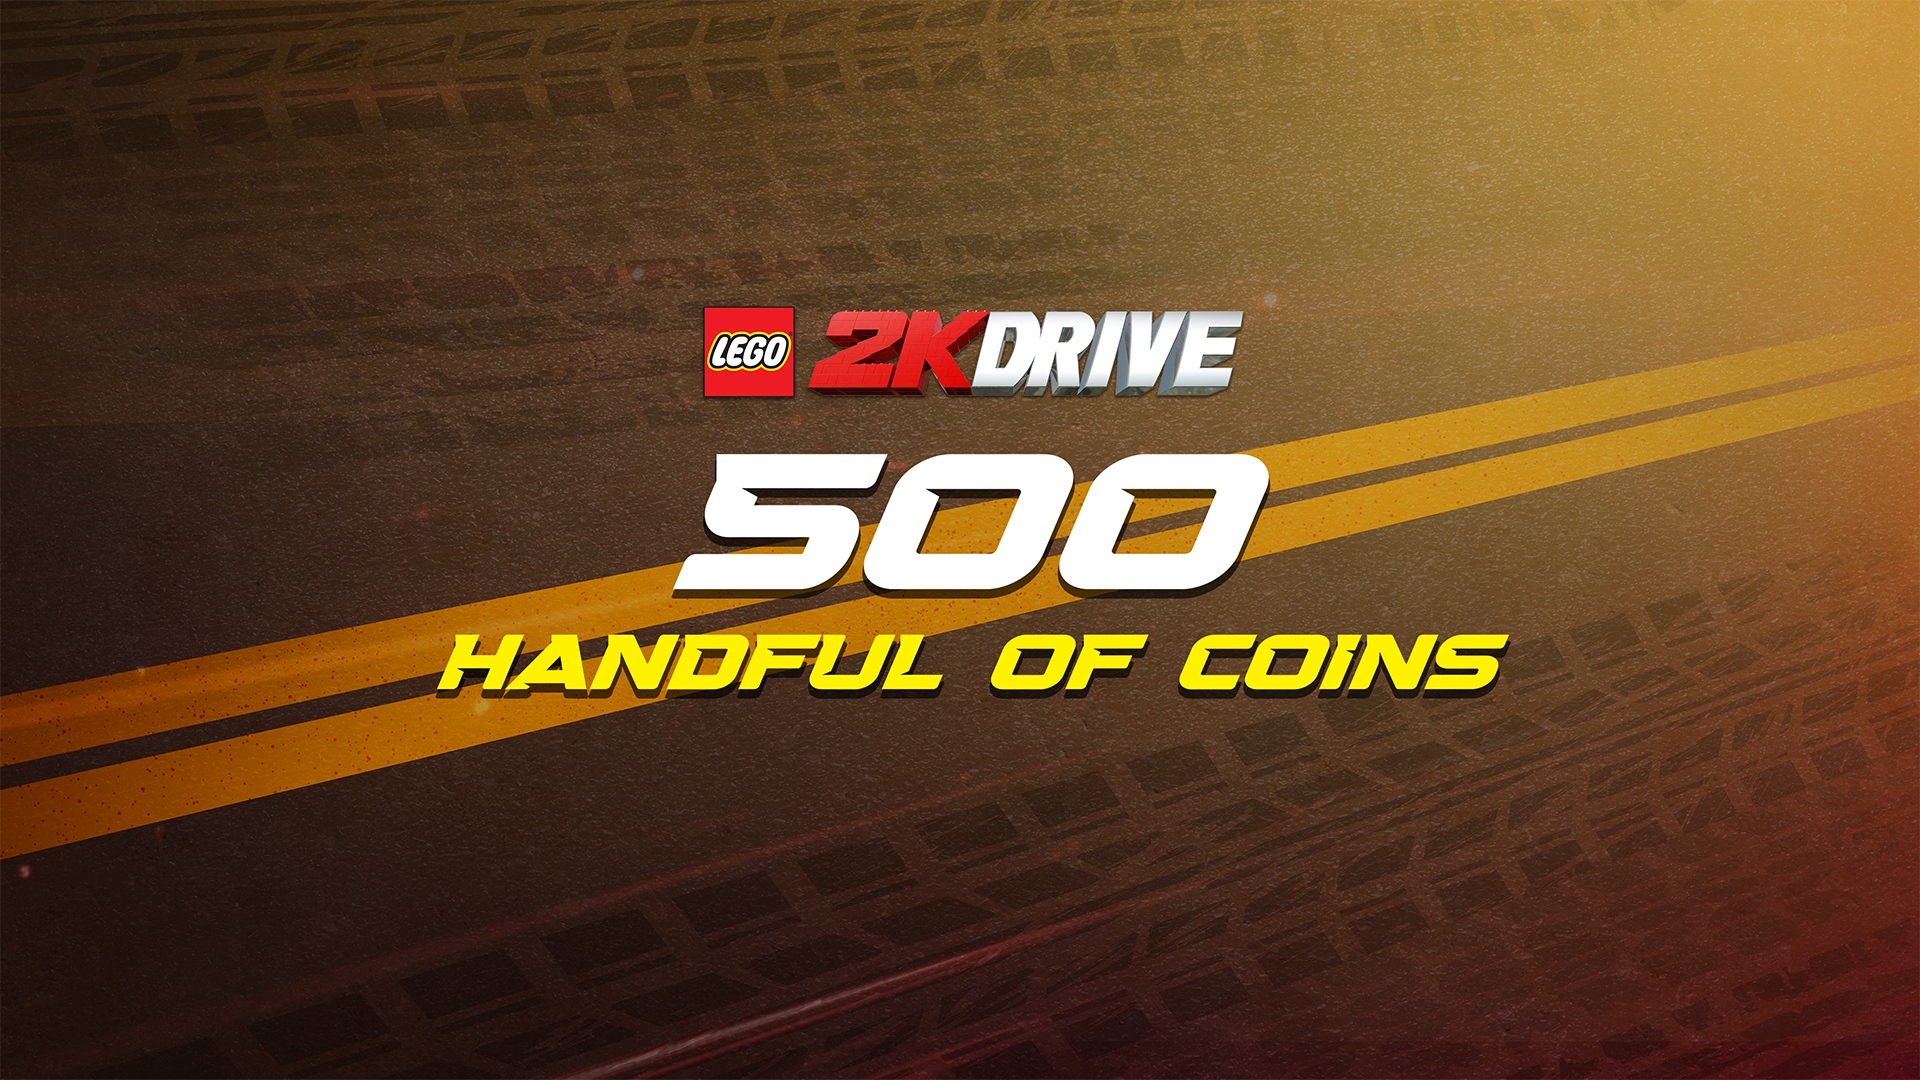 LEGO 2K Drive - Handful of Coins XBOX One / Xbox Series X|S CD Key, $5.19